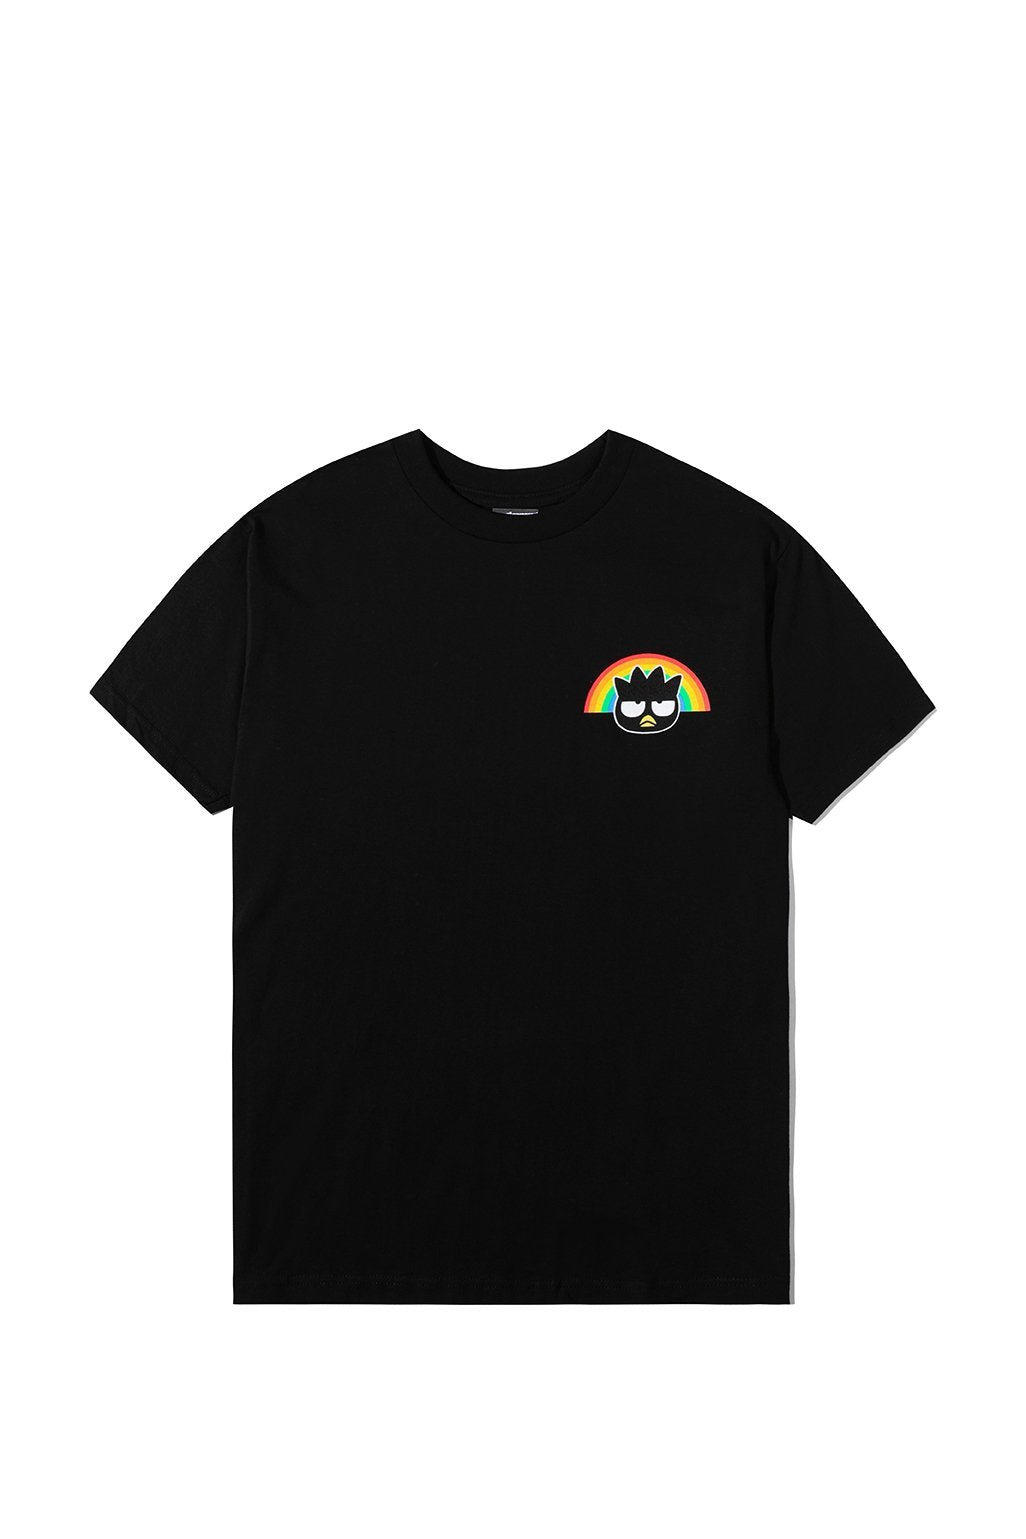 The Hundreds x Sanrio Badtz-Maru T-Shirt in Black